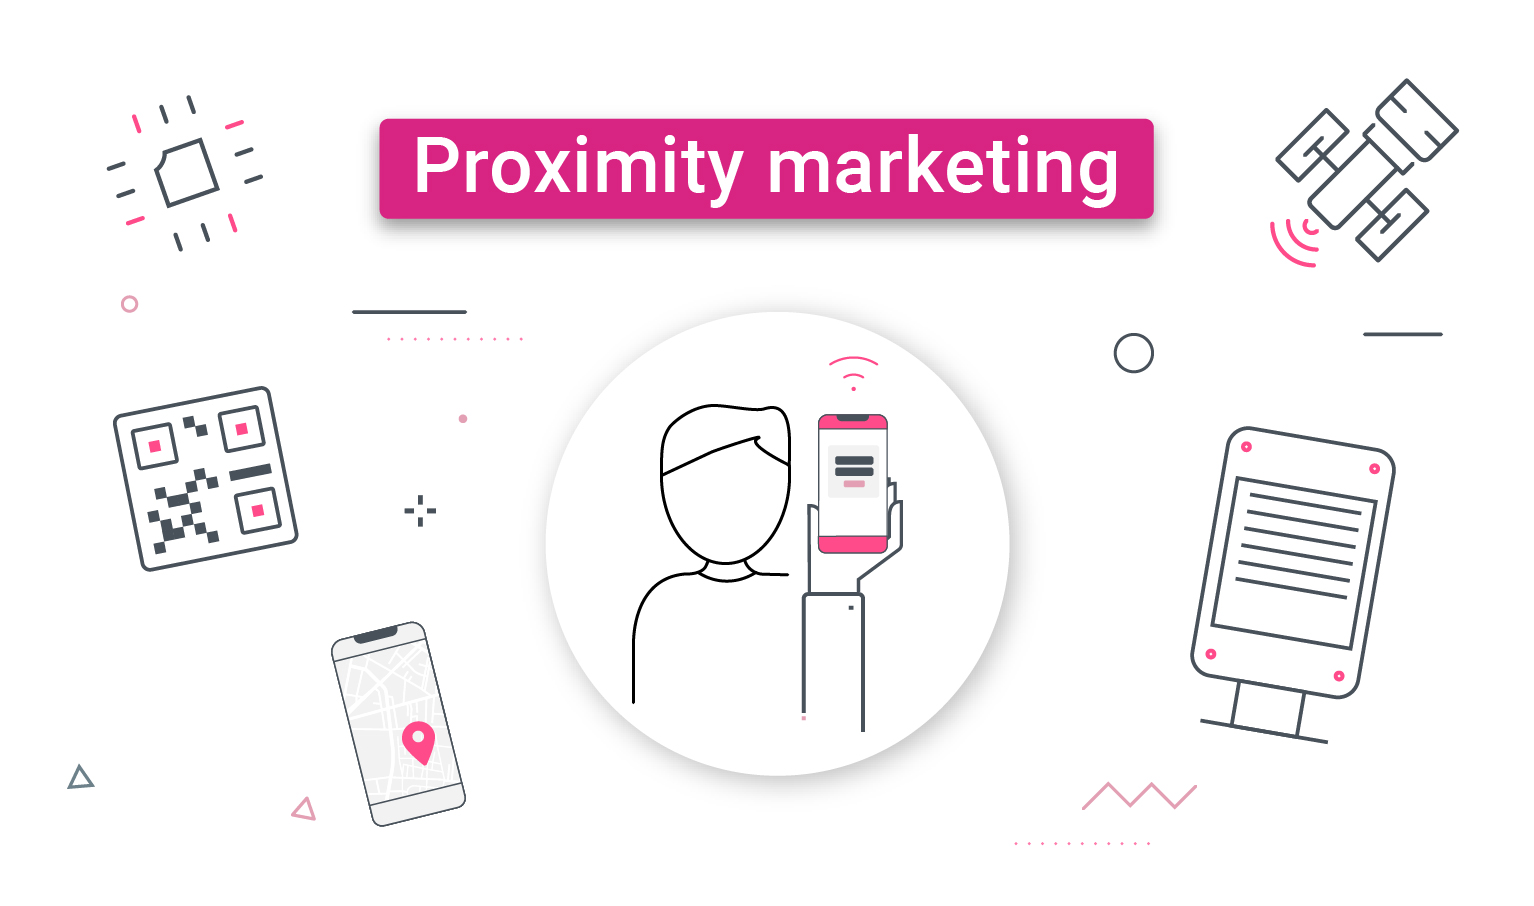 5 proximity marketing technologies you need to know